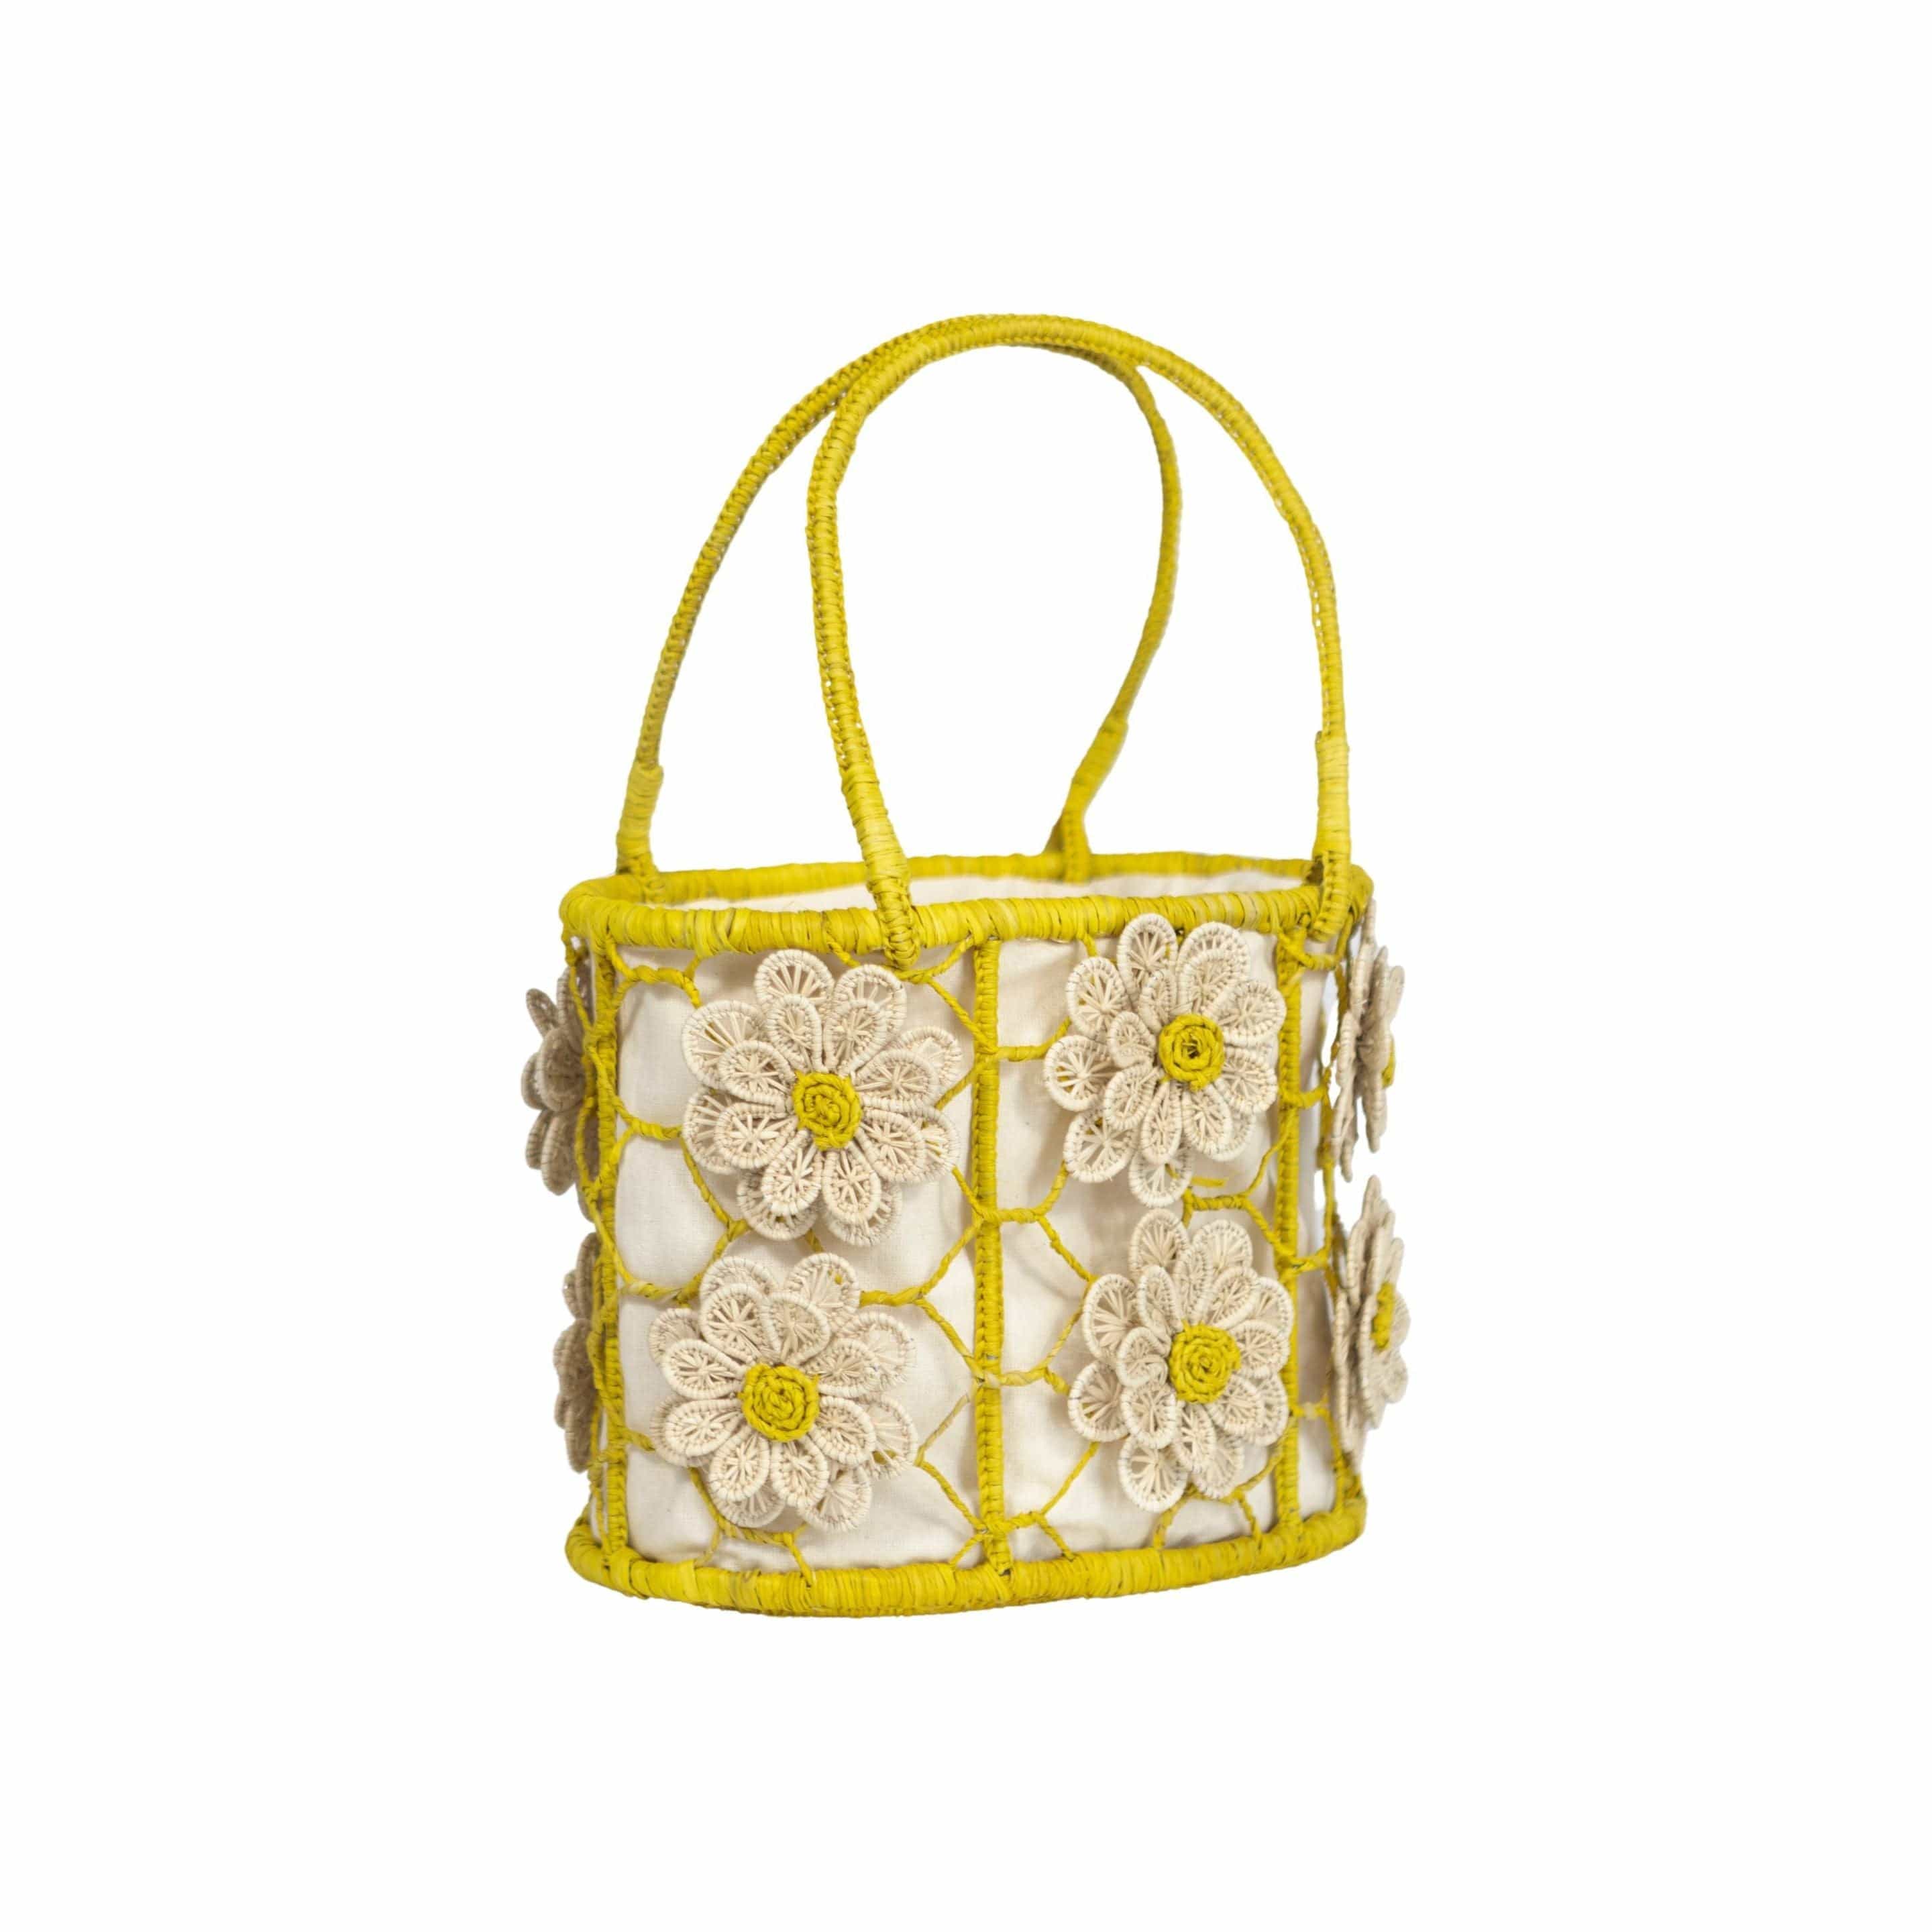 APAYA Handbags Margarita Yellow/Natural